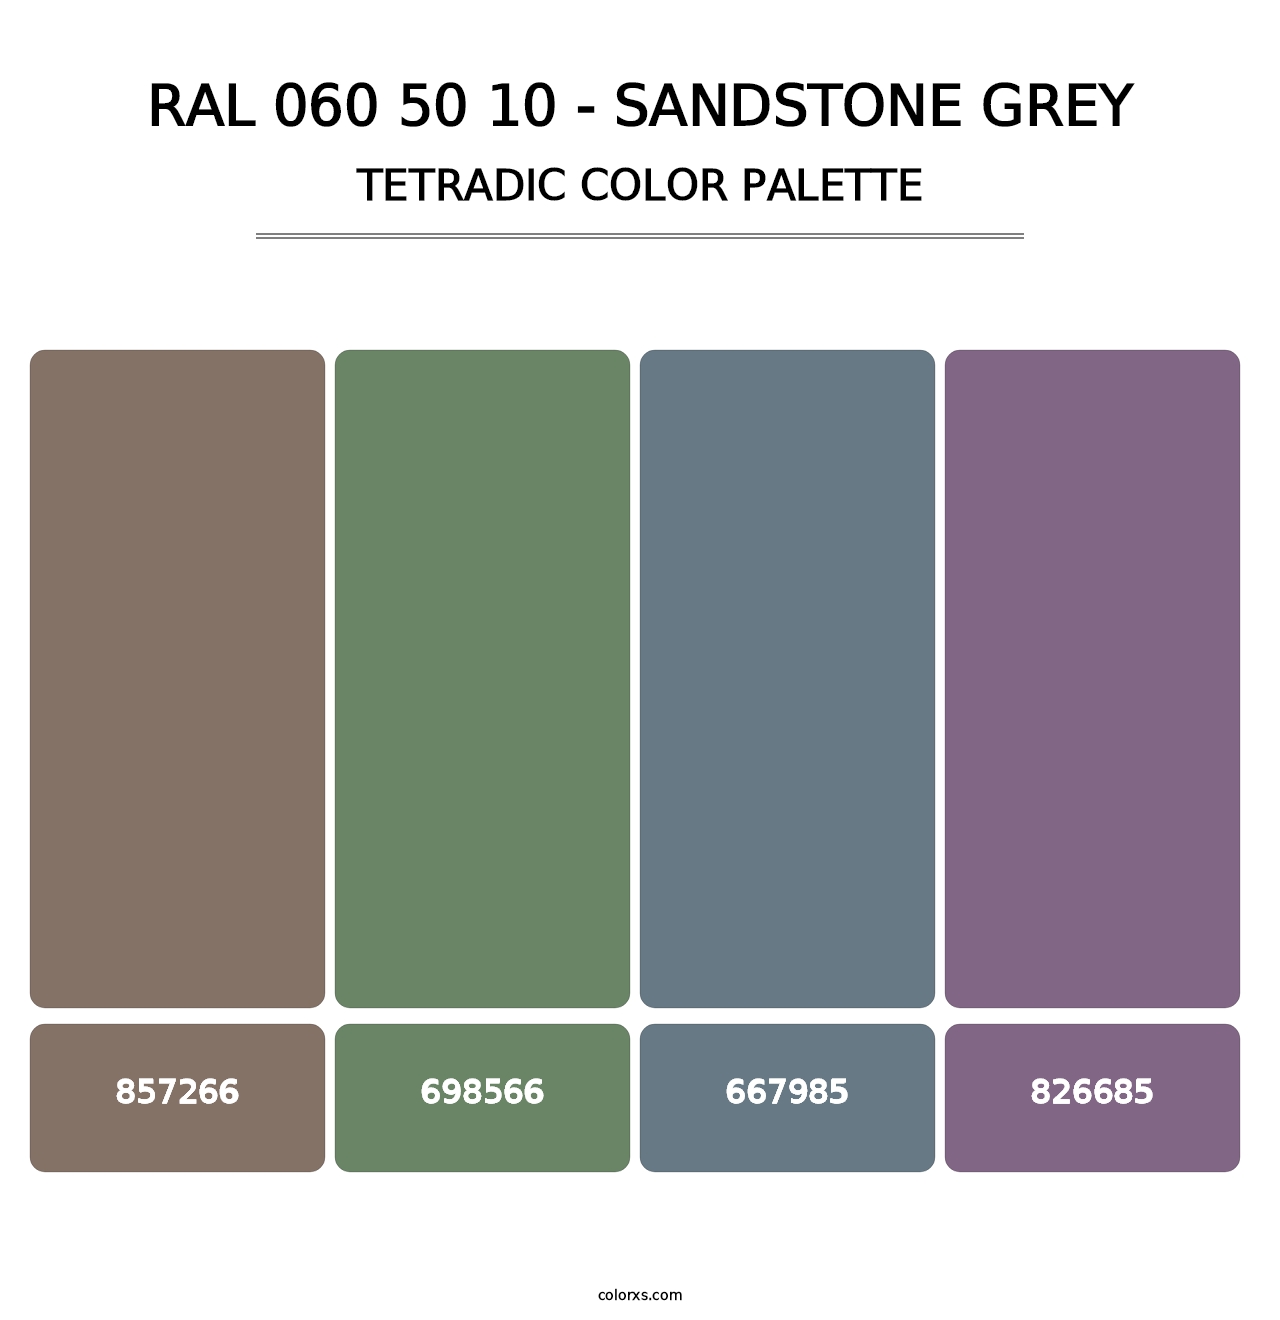 RAL 060 50 10 - Sandstone Grey - Tetradic Color Palette